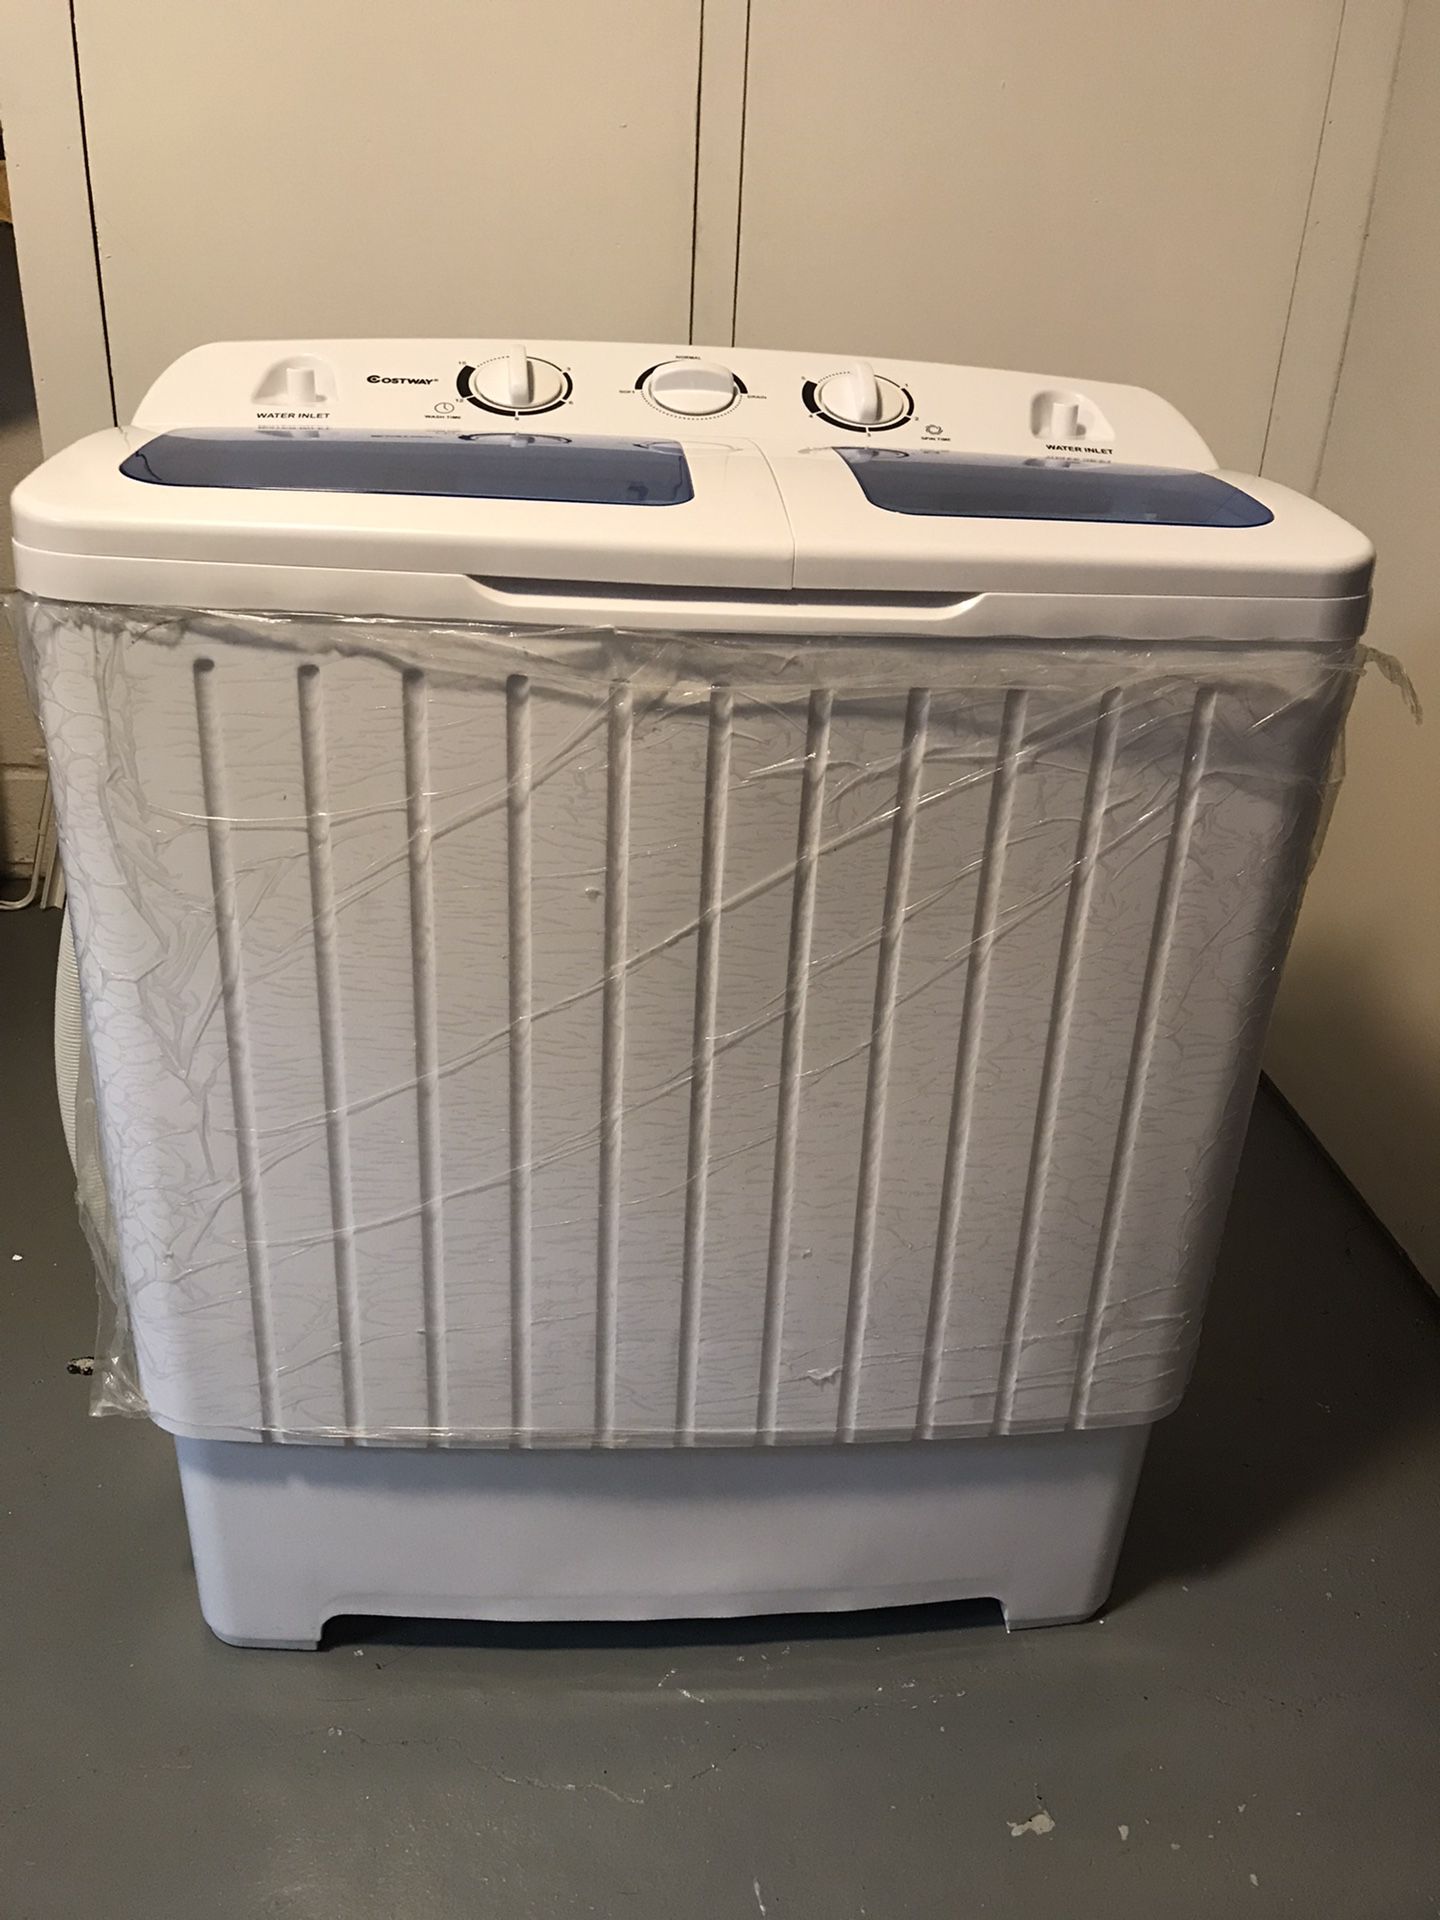 Costway Portable Twin Tub Washing Machine